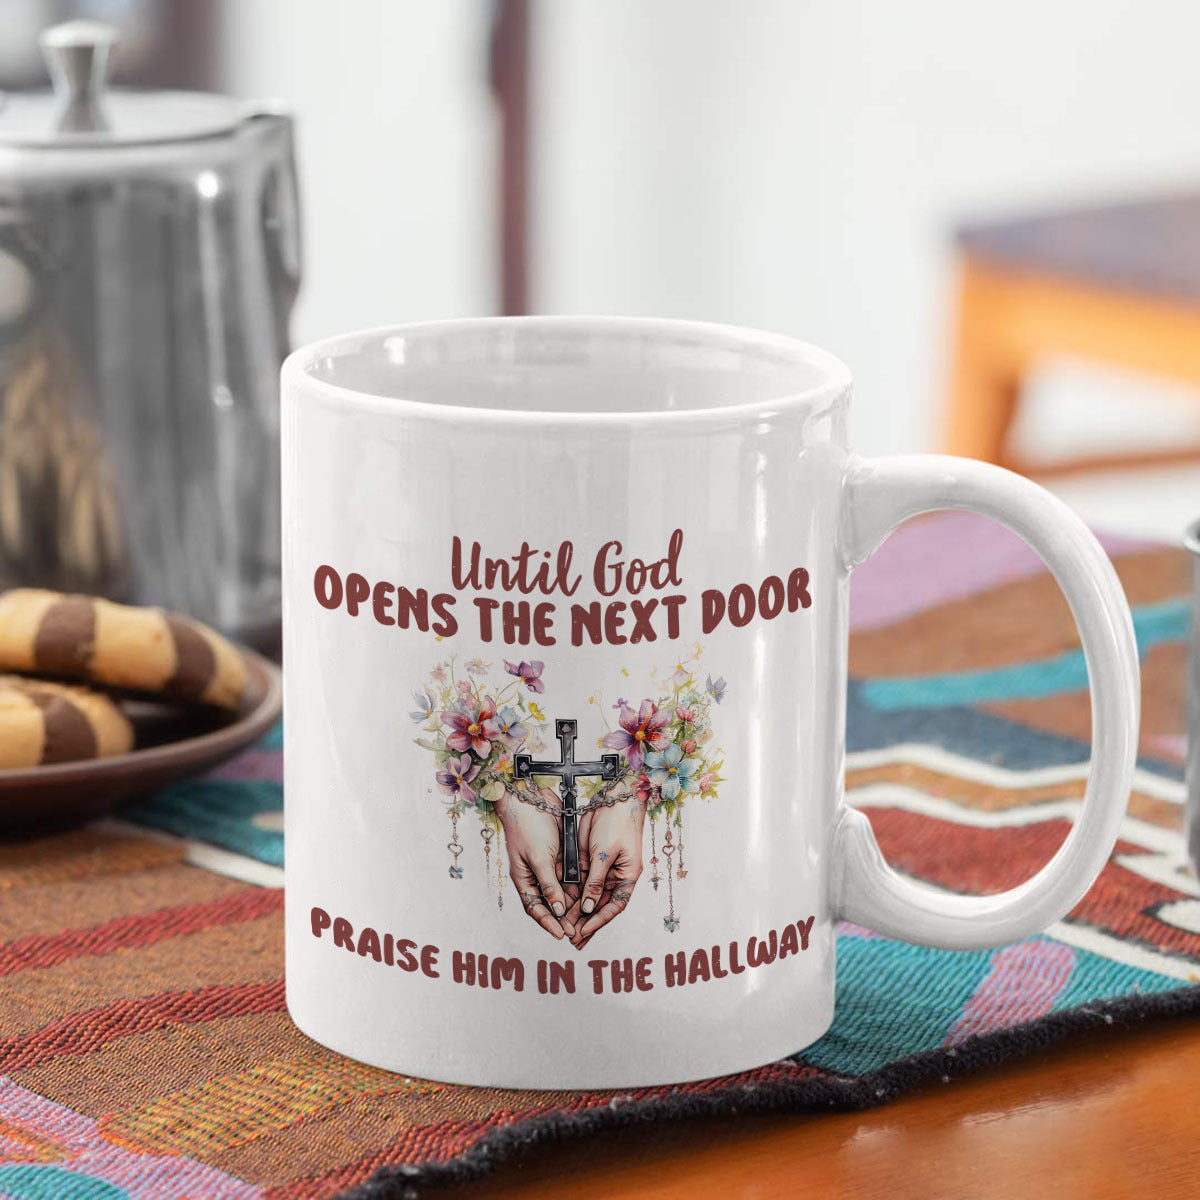 Until God Opens The Next Door, Praise Him In The Hallway Christian White Ceramic Mug, 11oz claimedbygoddesigns